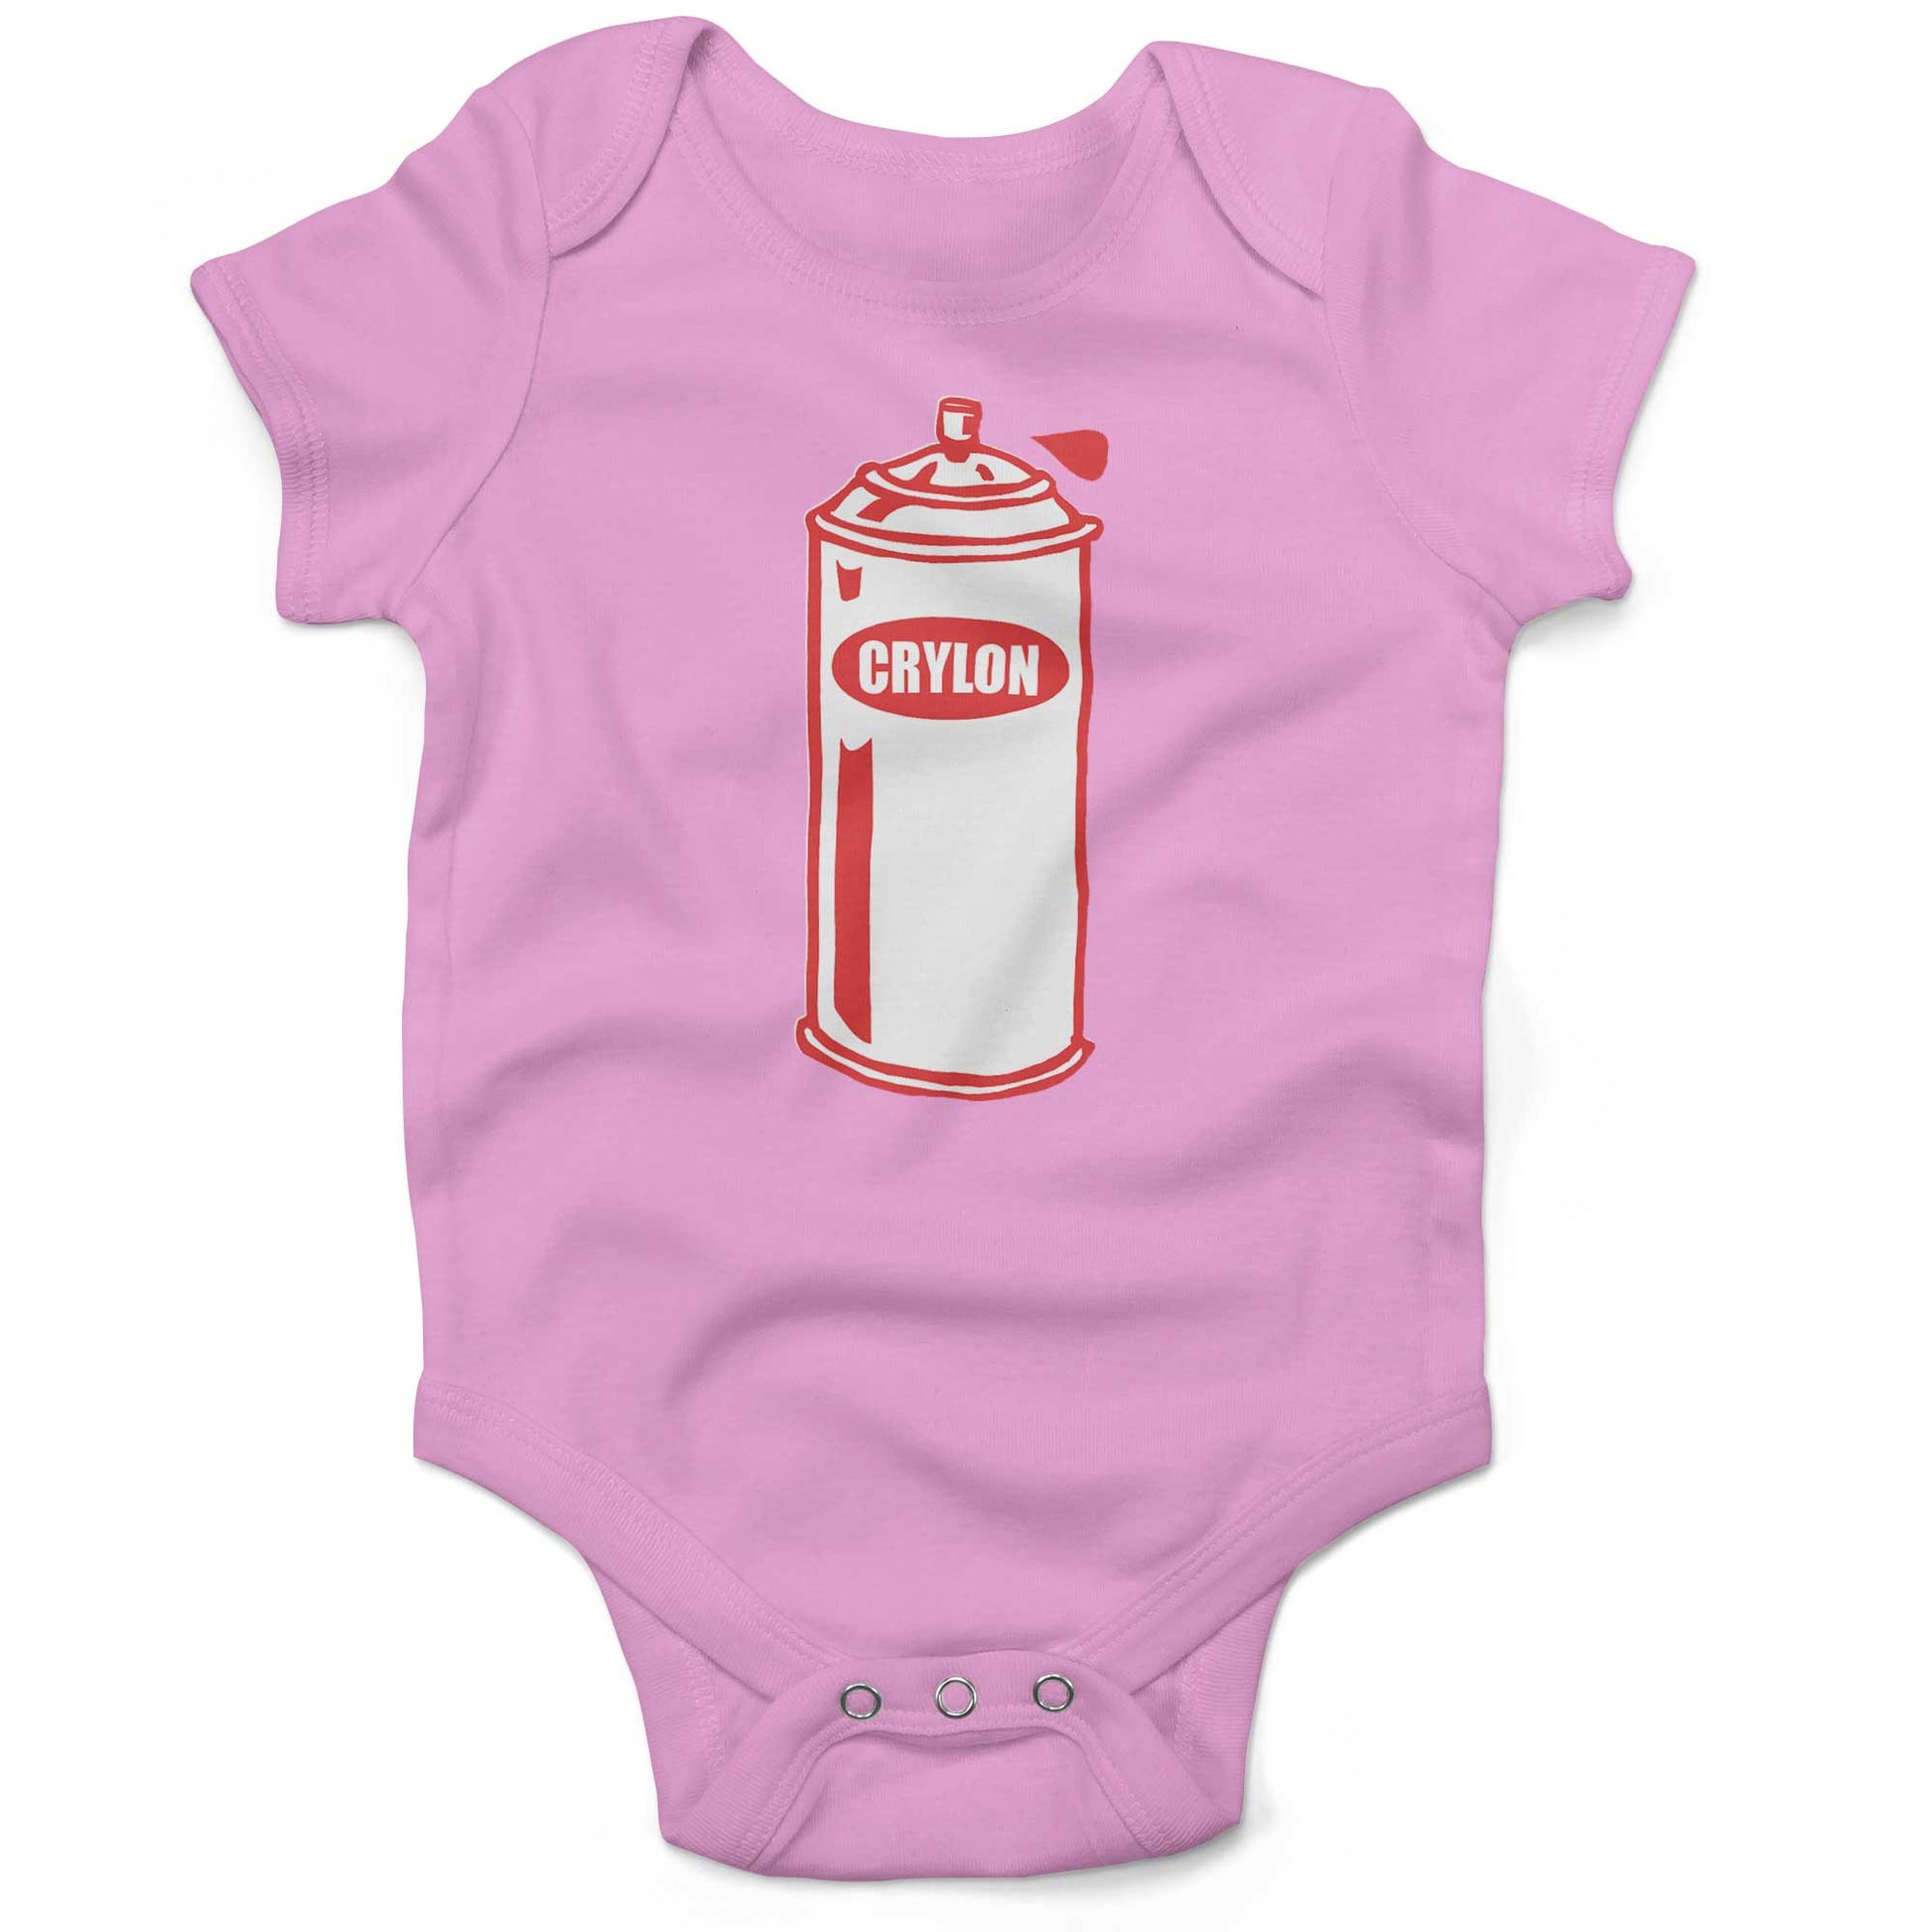 Crylon Cans Infant Bodysuit or Raglan Tee-Organic Pink-3-6 months